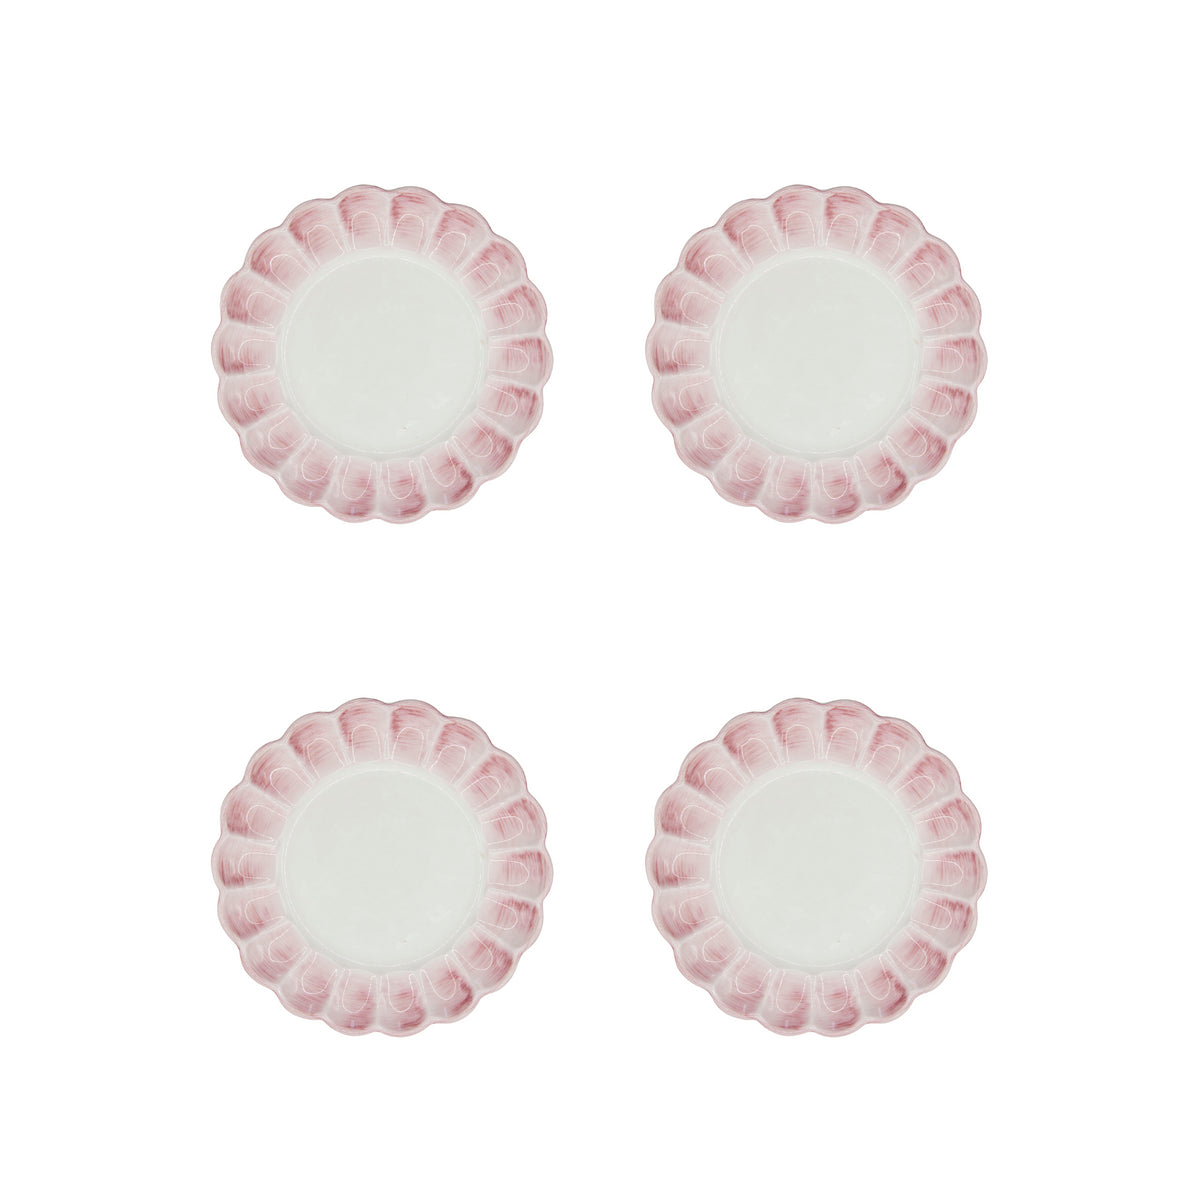 Lido Side Plate, Pink, Set of 4 - Skye McAlpine Tavola